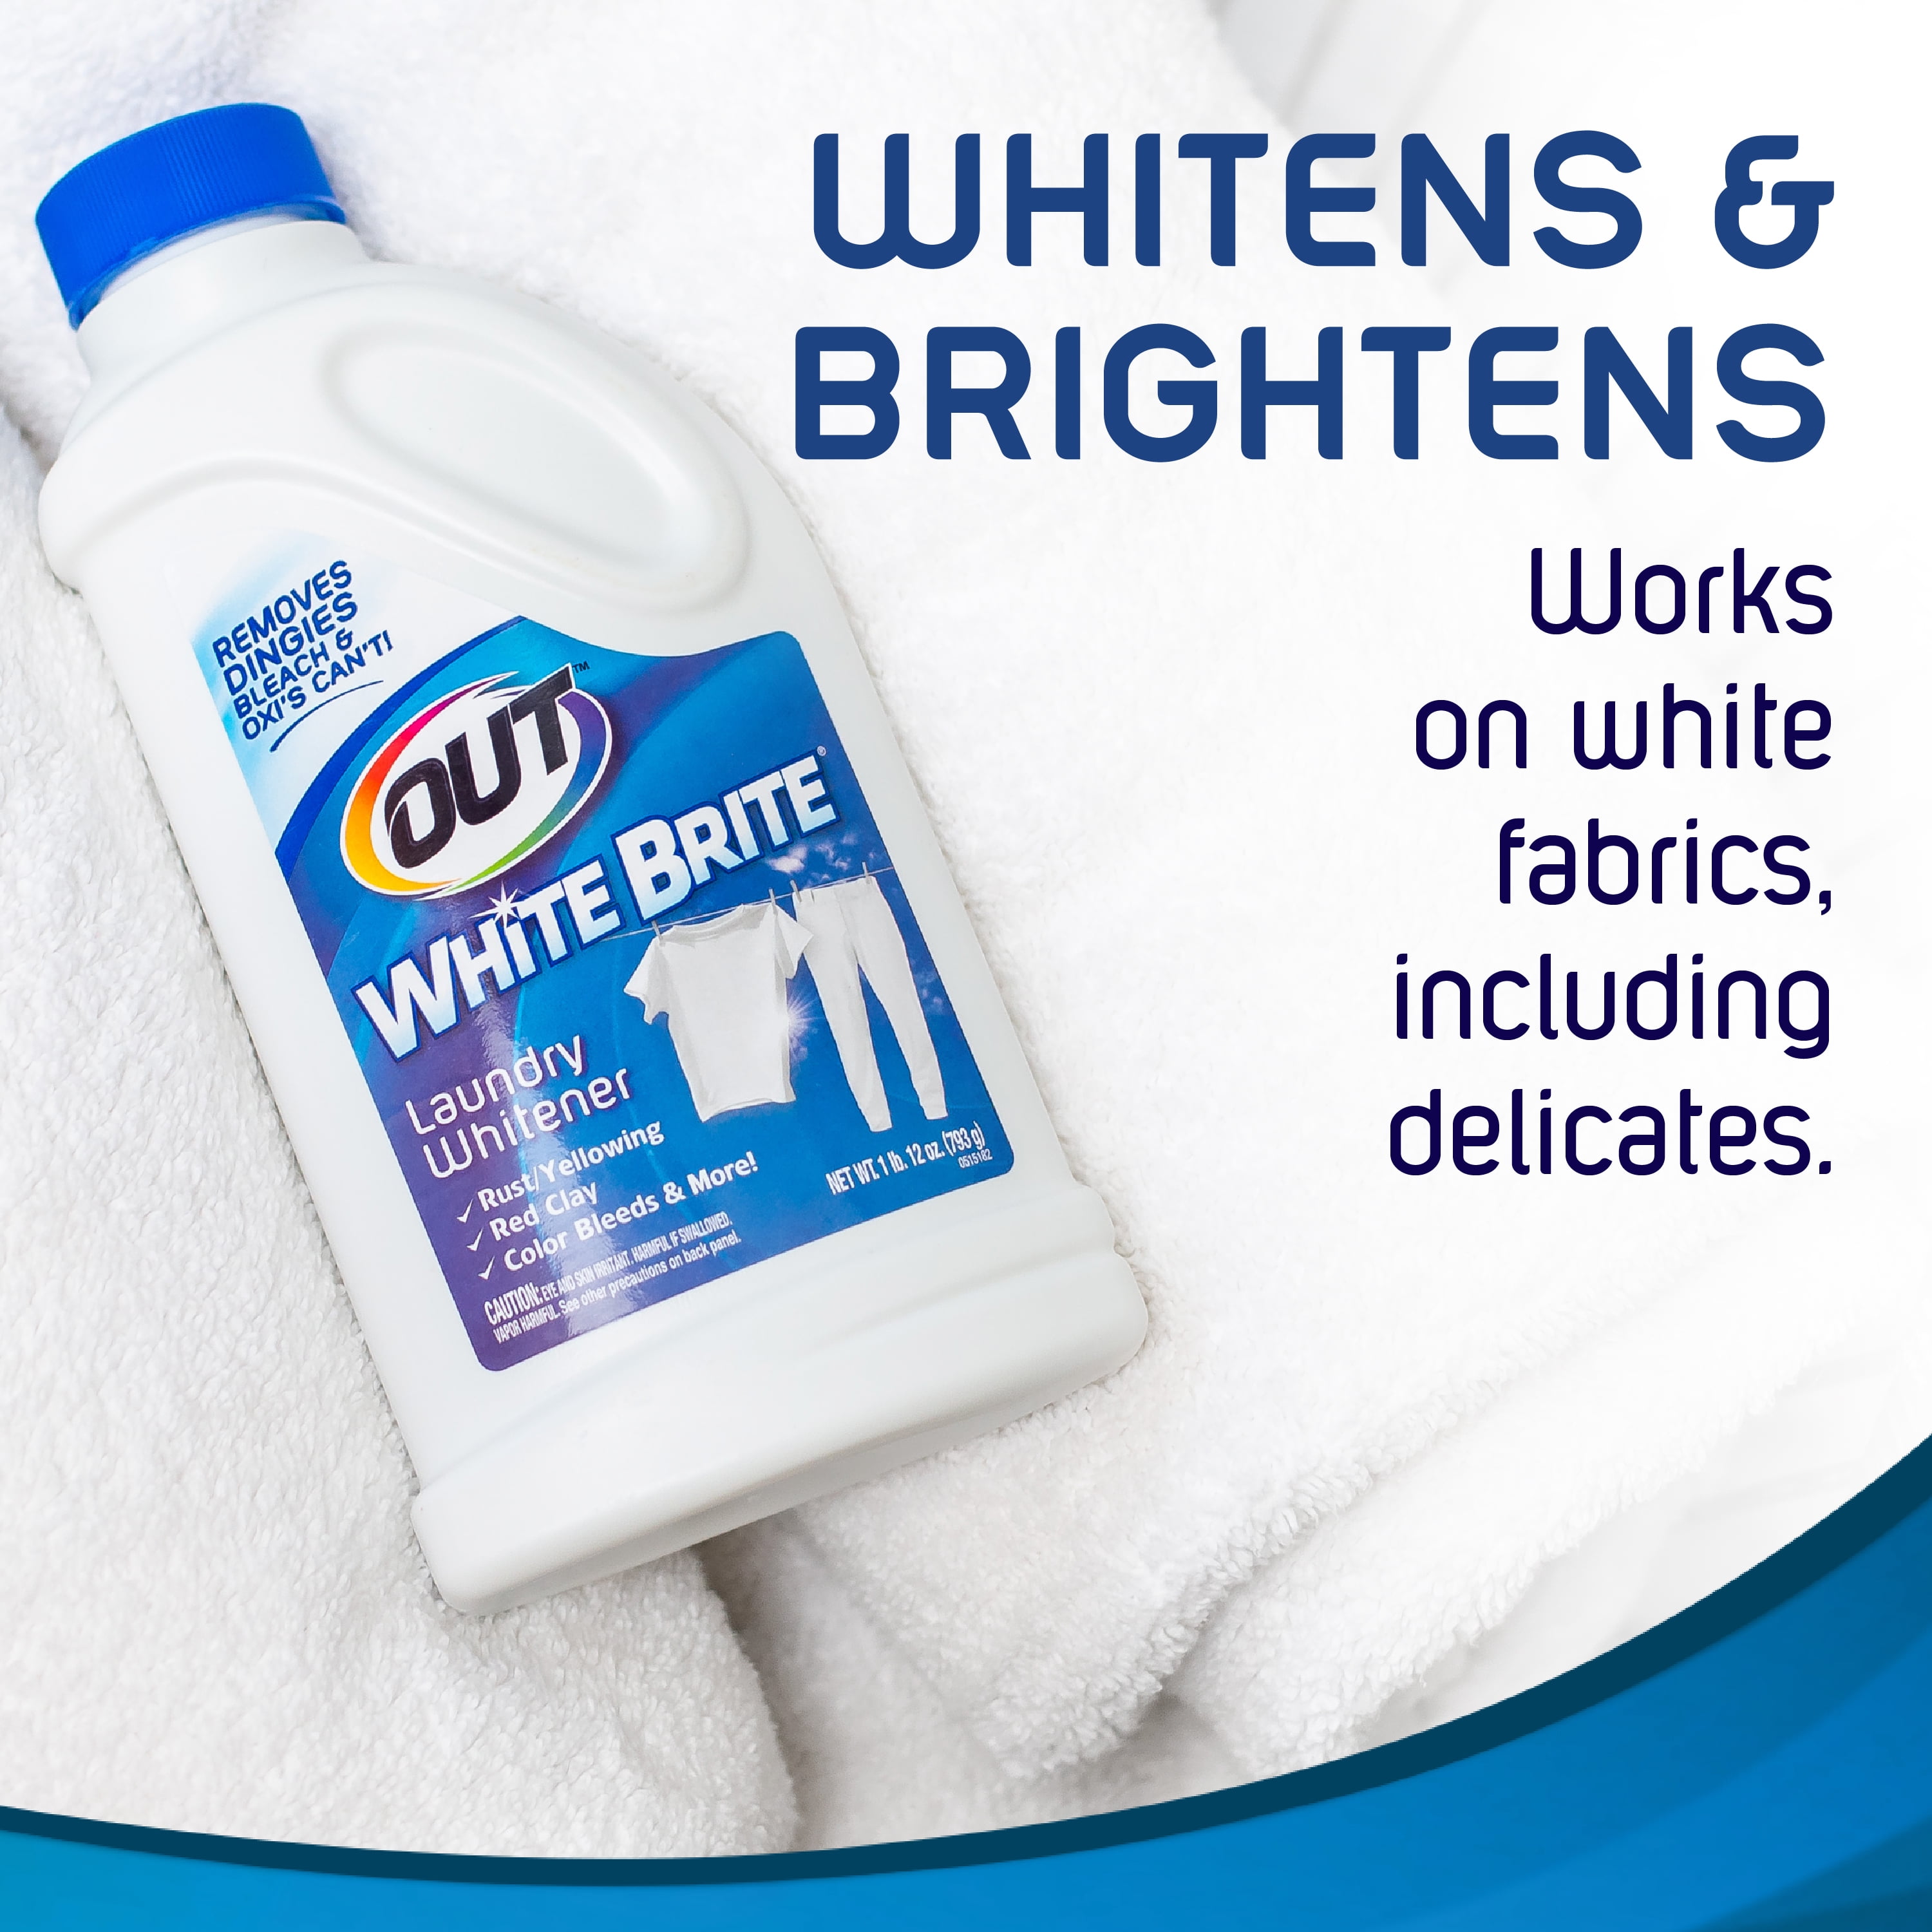 OUT White Brite Laundry Whitener Powder, 1 lb 12 oz, 2 Bottles